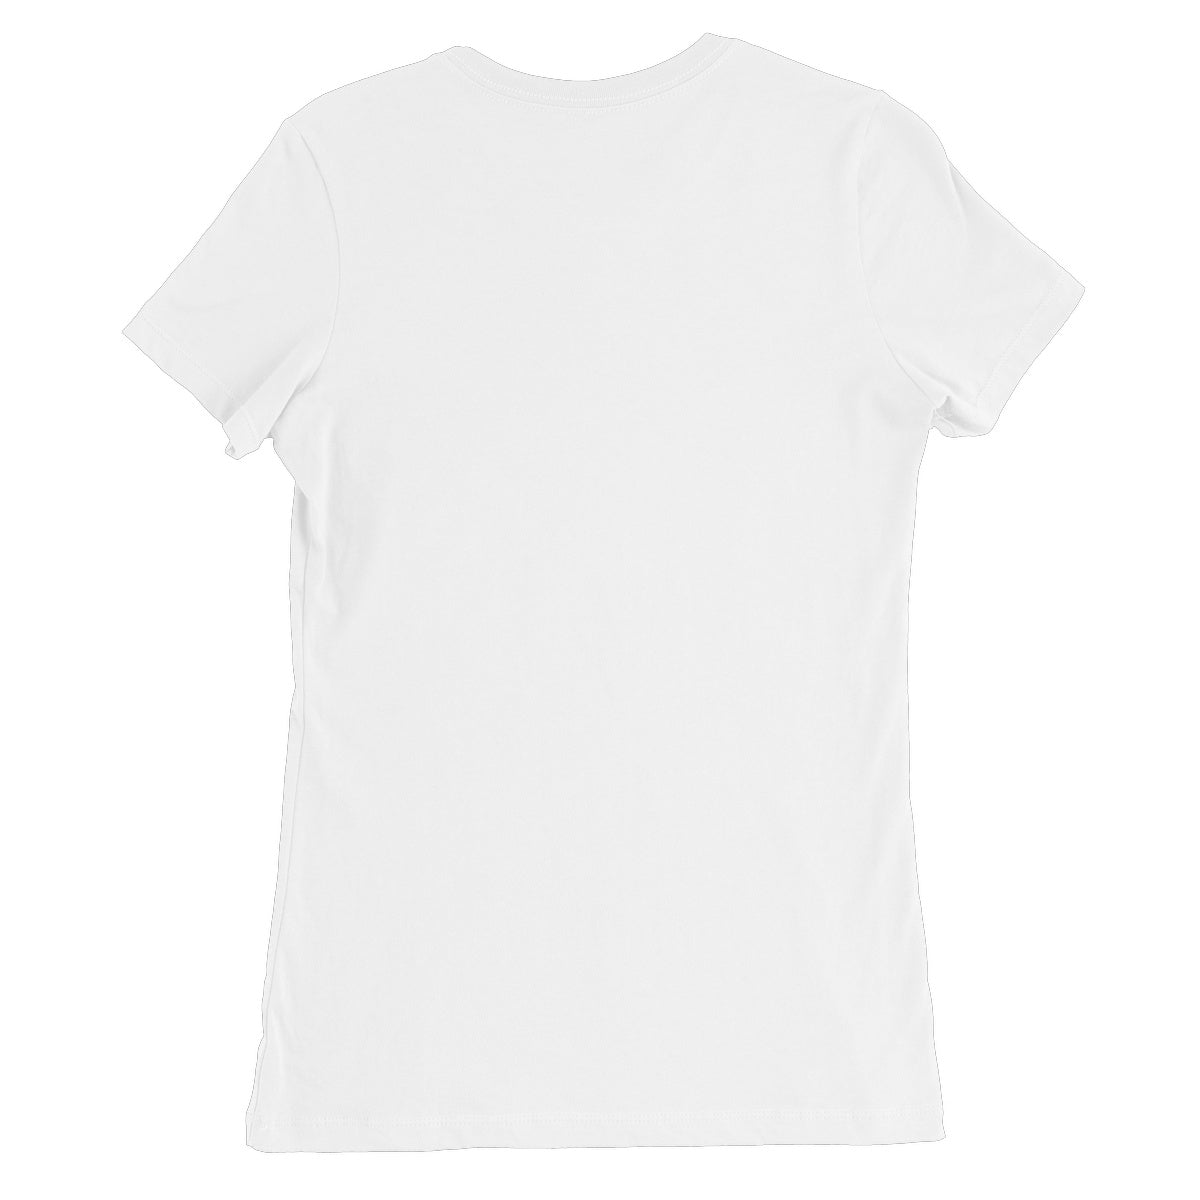 Möbius Flow, Dawn Globe Women's Favourite T-Shirt